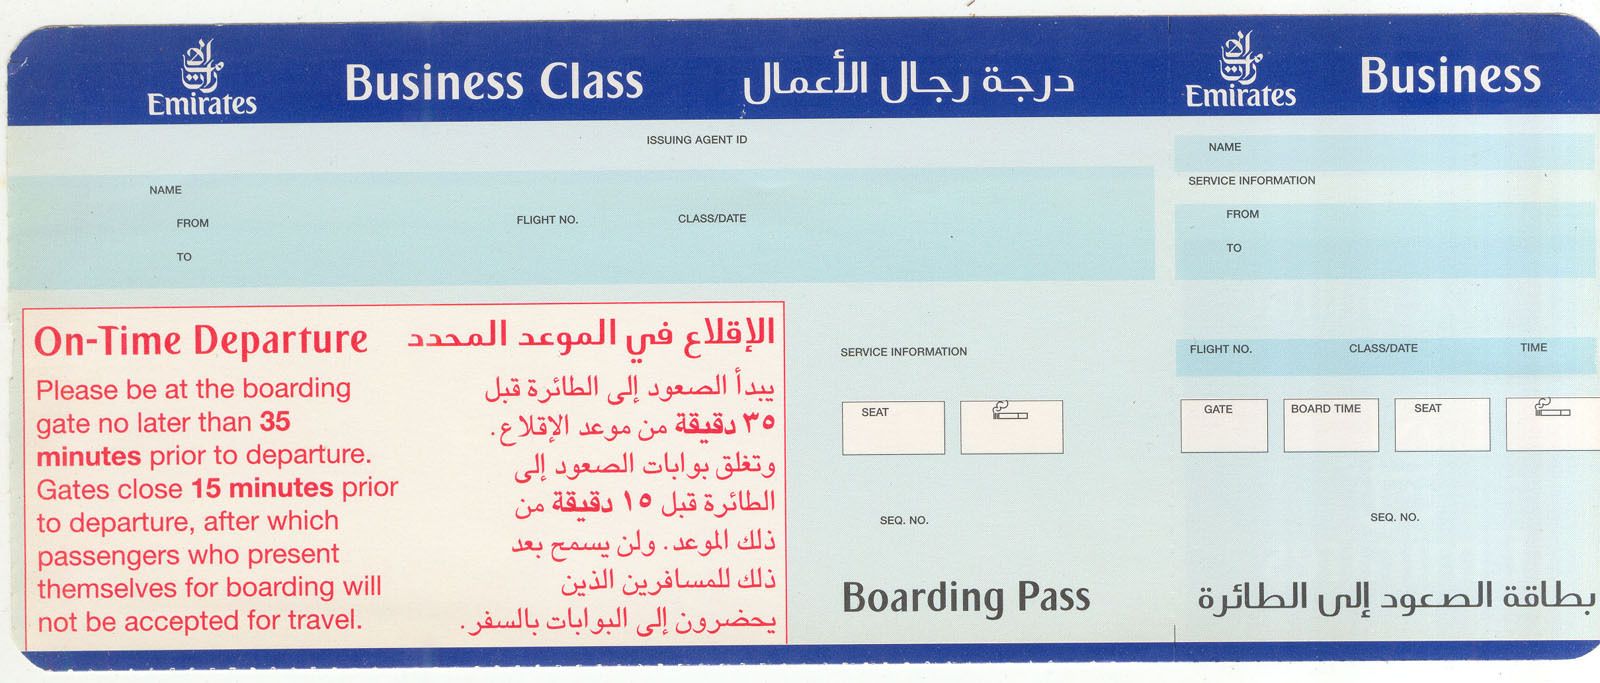   BUSINESS CLASS BOARDING PASS EMIRATES AIRLINES AIRTICKET DUBAI GCC